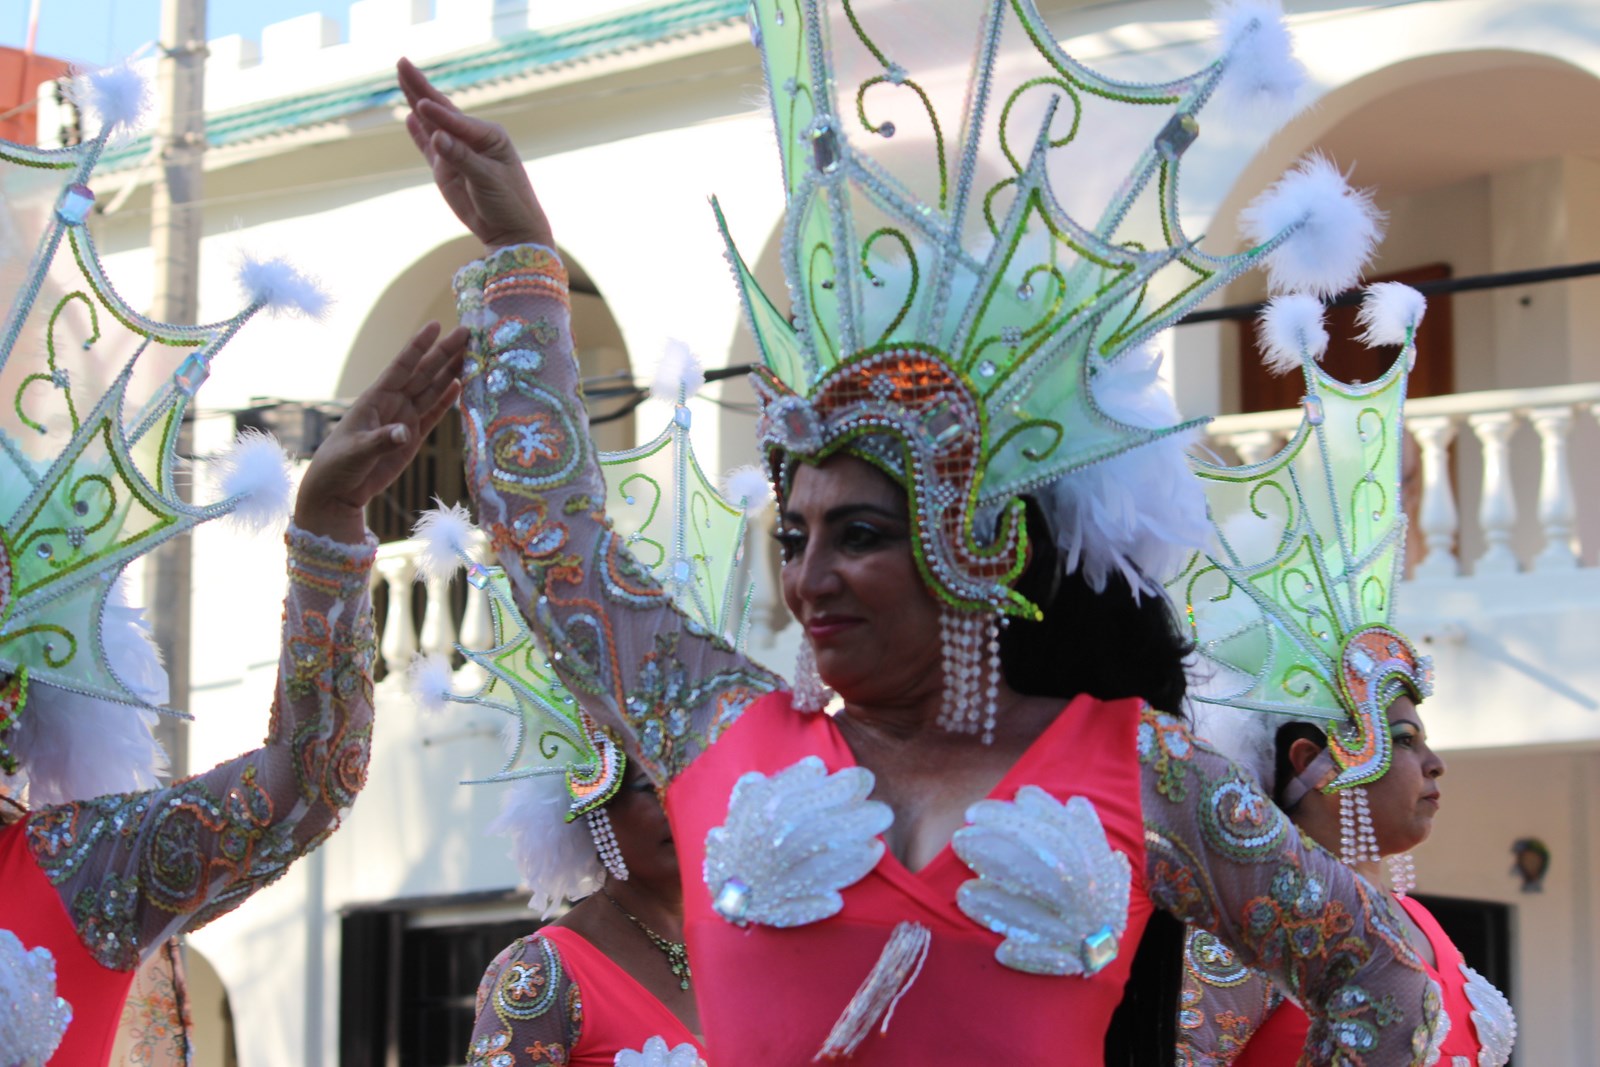 Jamqueen-Camerajunkie: Faces of Carnival, Isla Mujeres Mexico